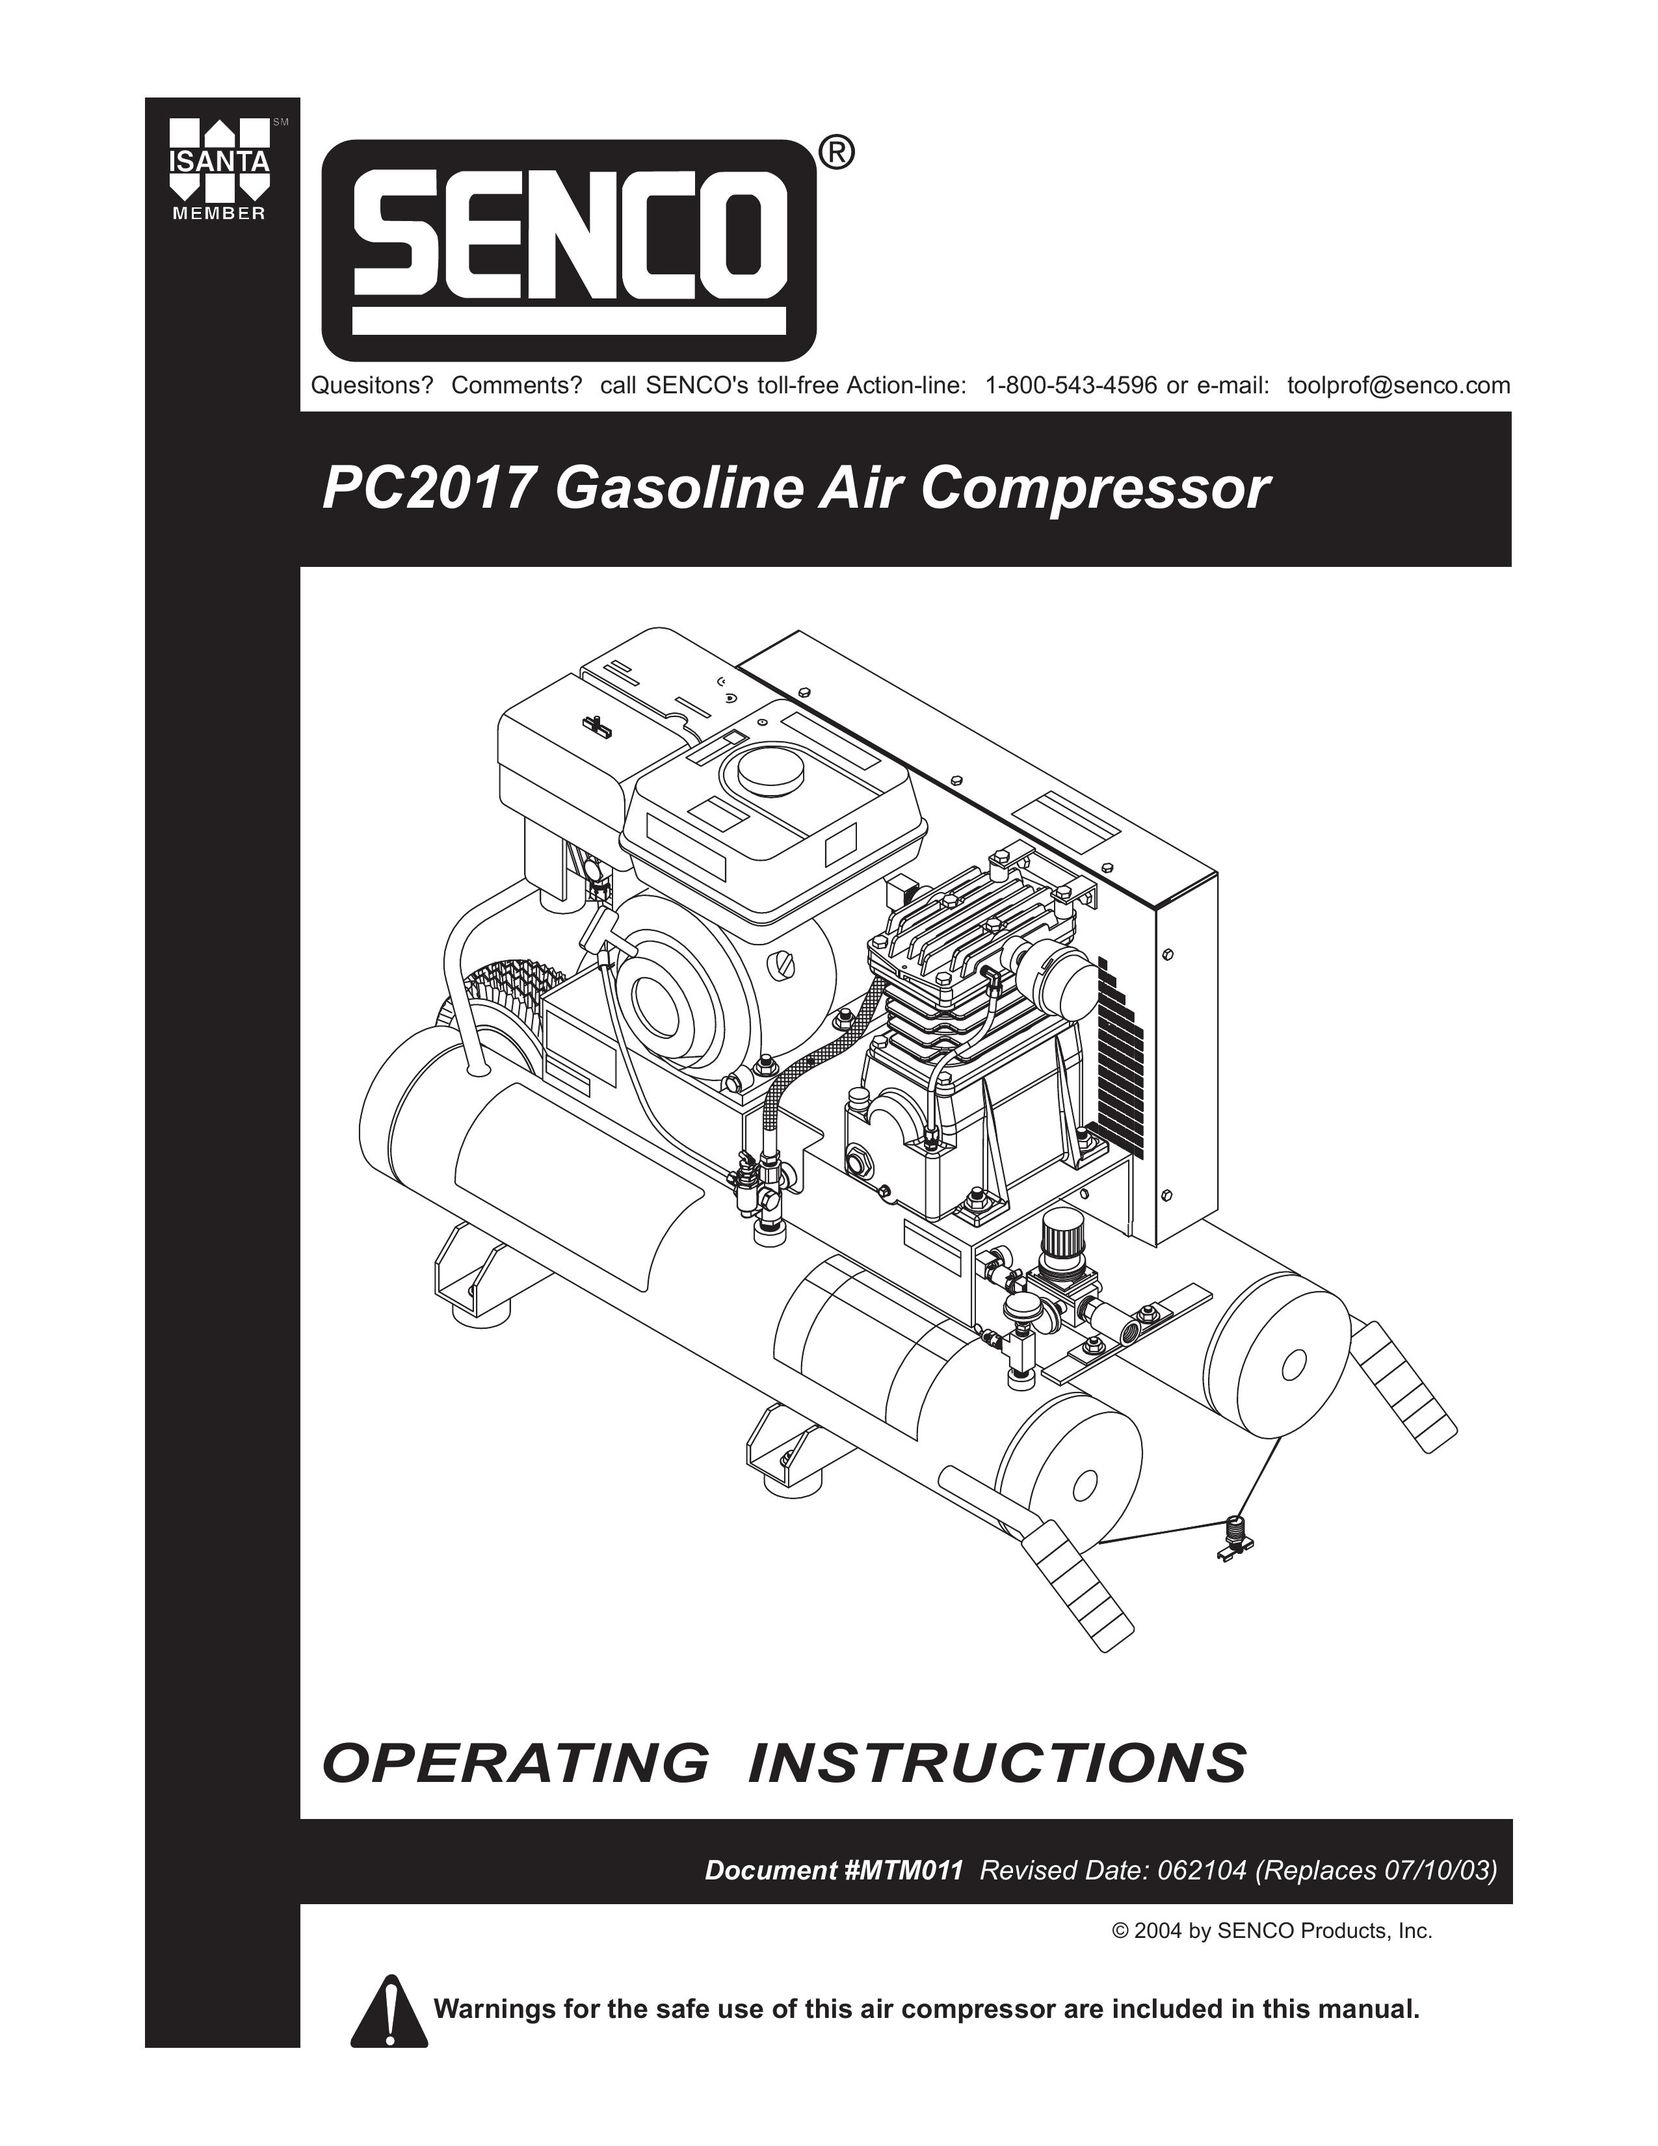 Senco PC2017 Air Compressor User Manual